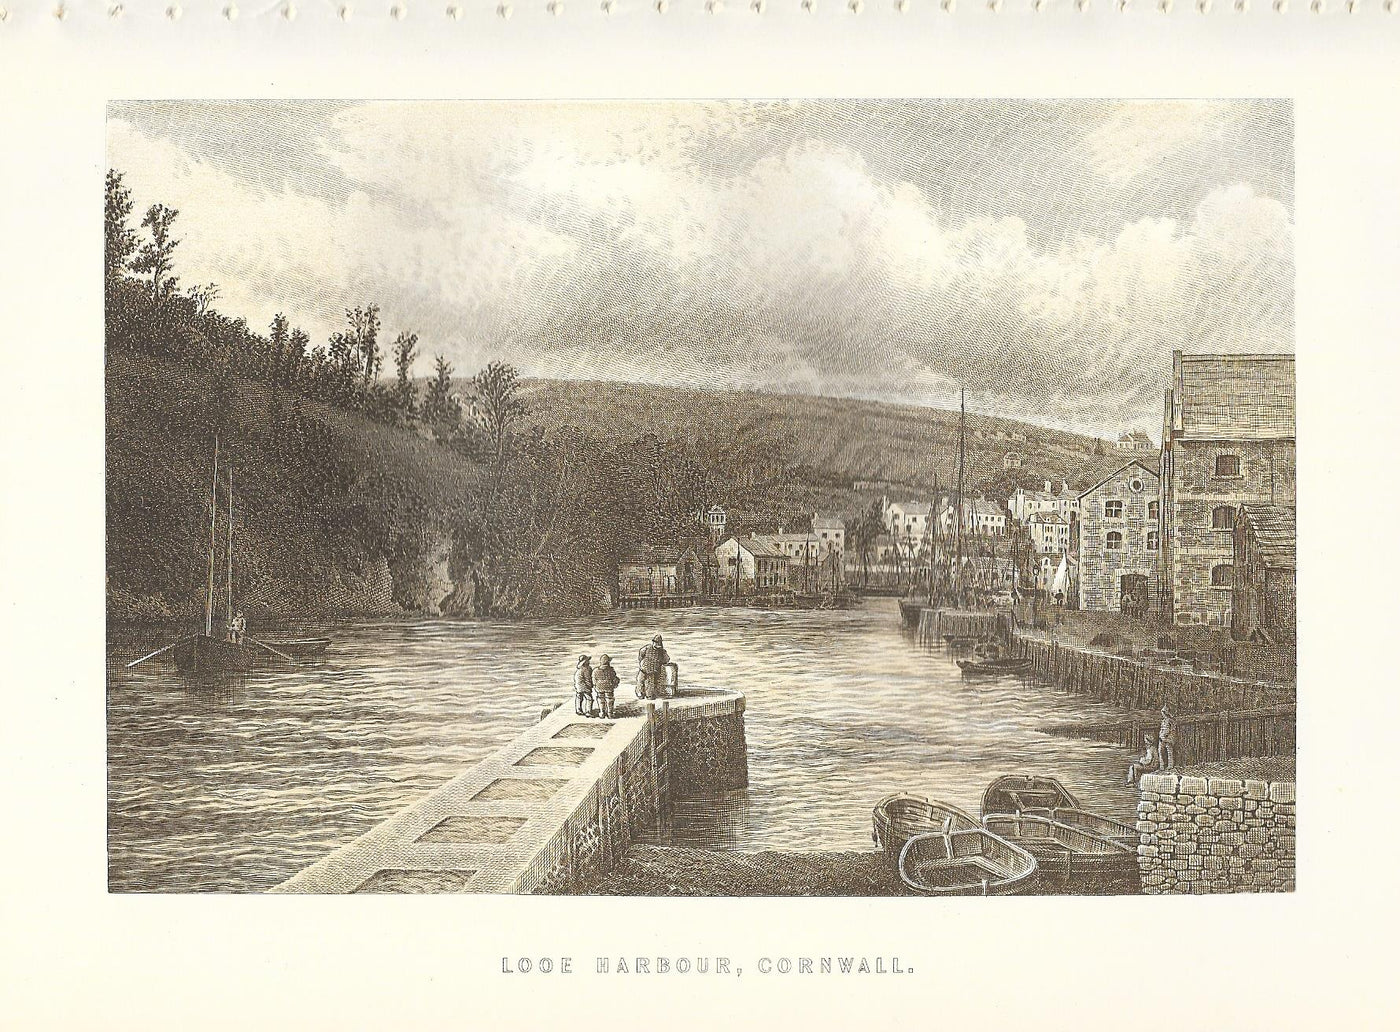 Looe Harbour Cornwall antique print